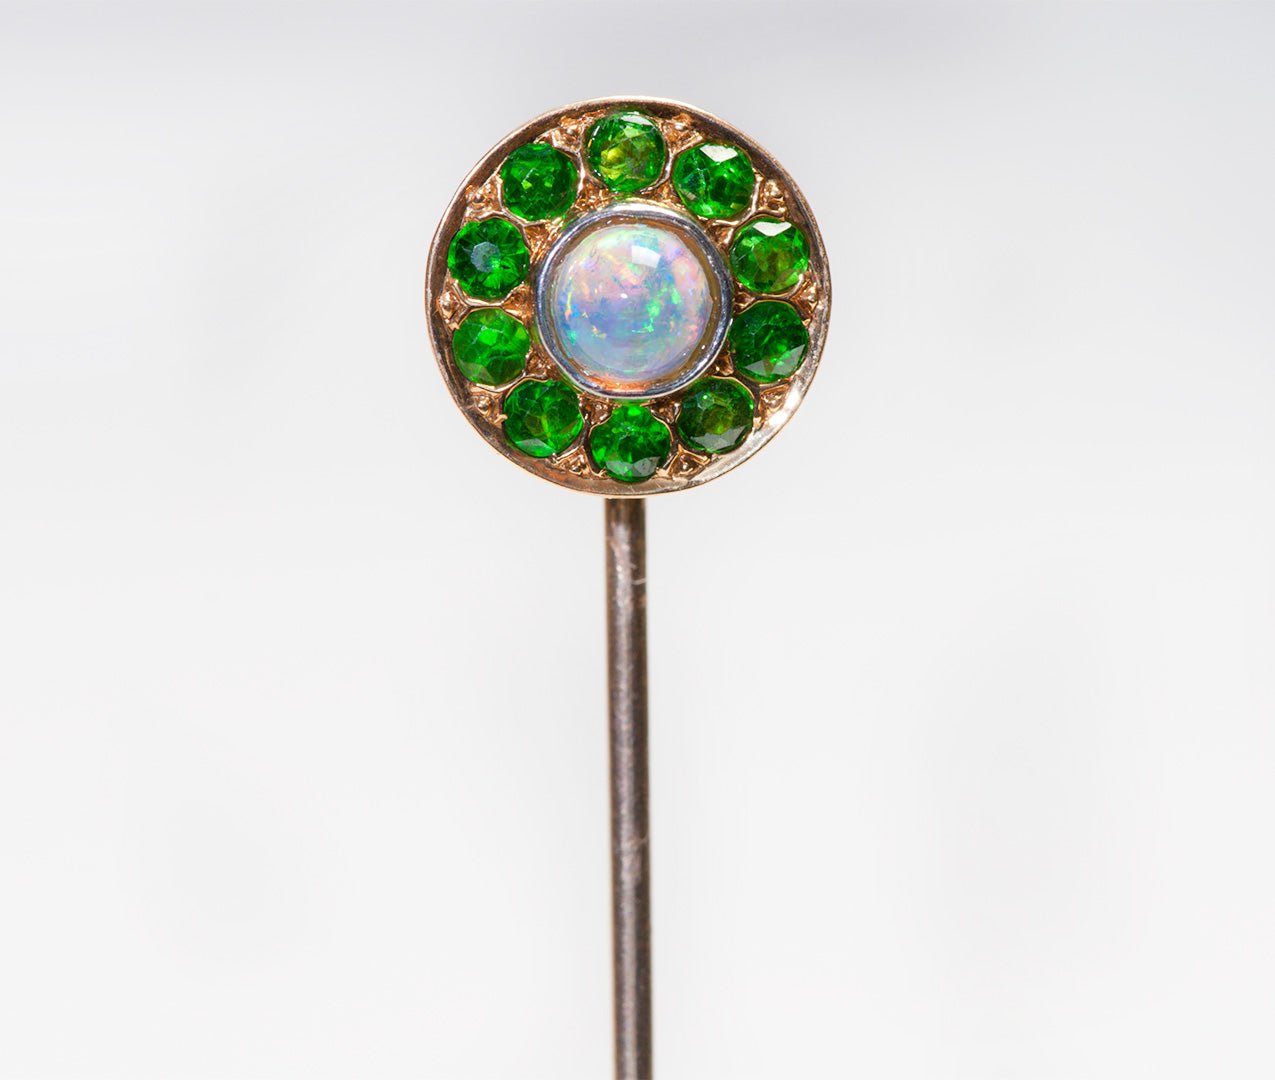 Antique Gold Demantoid Opal Stick Pin